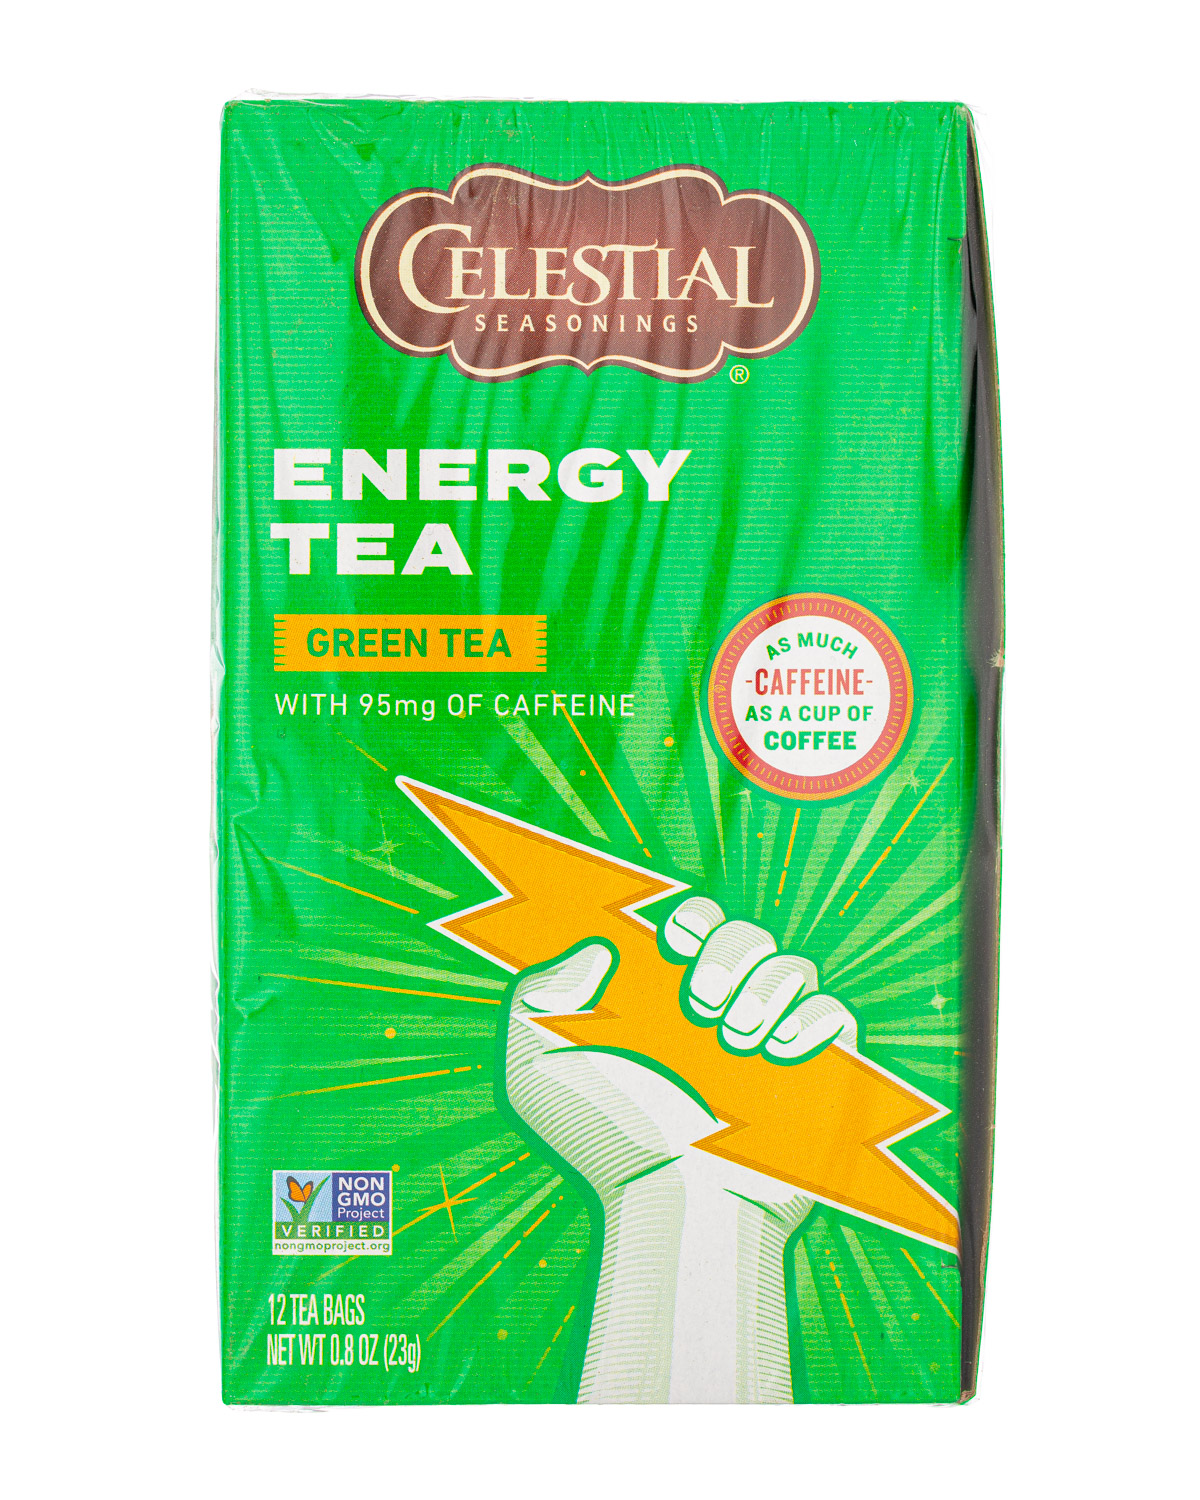 Energy Tea